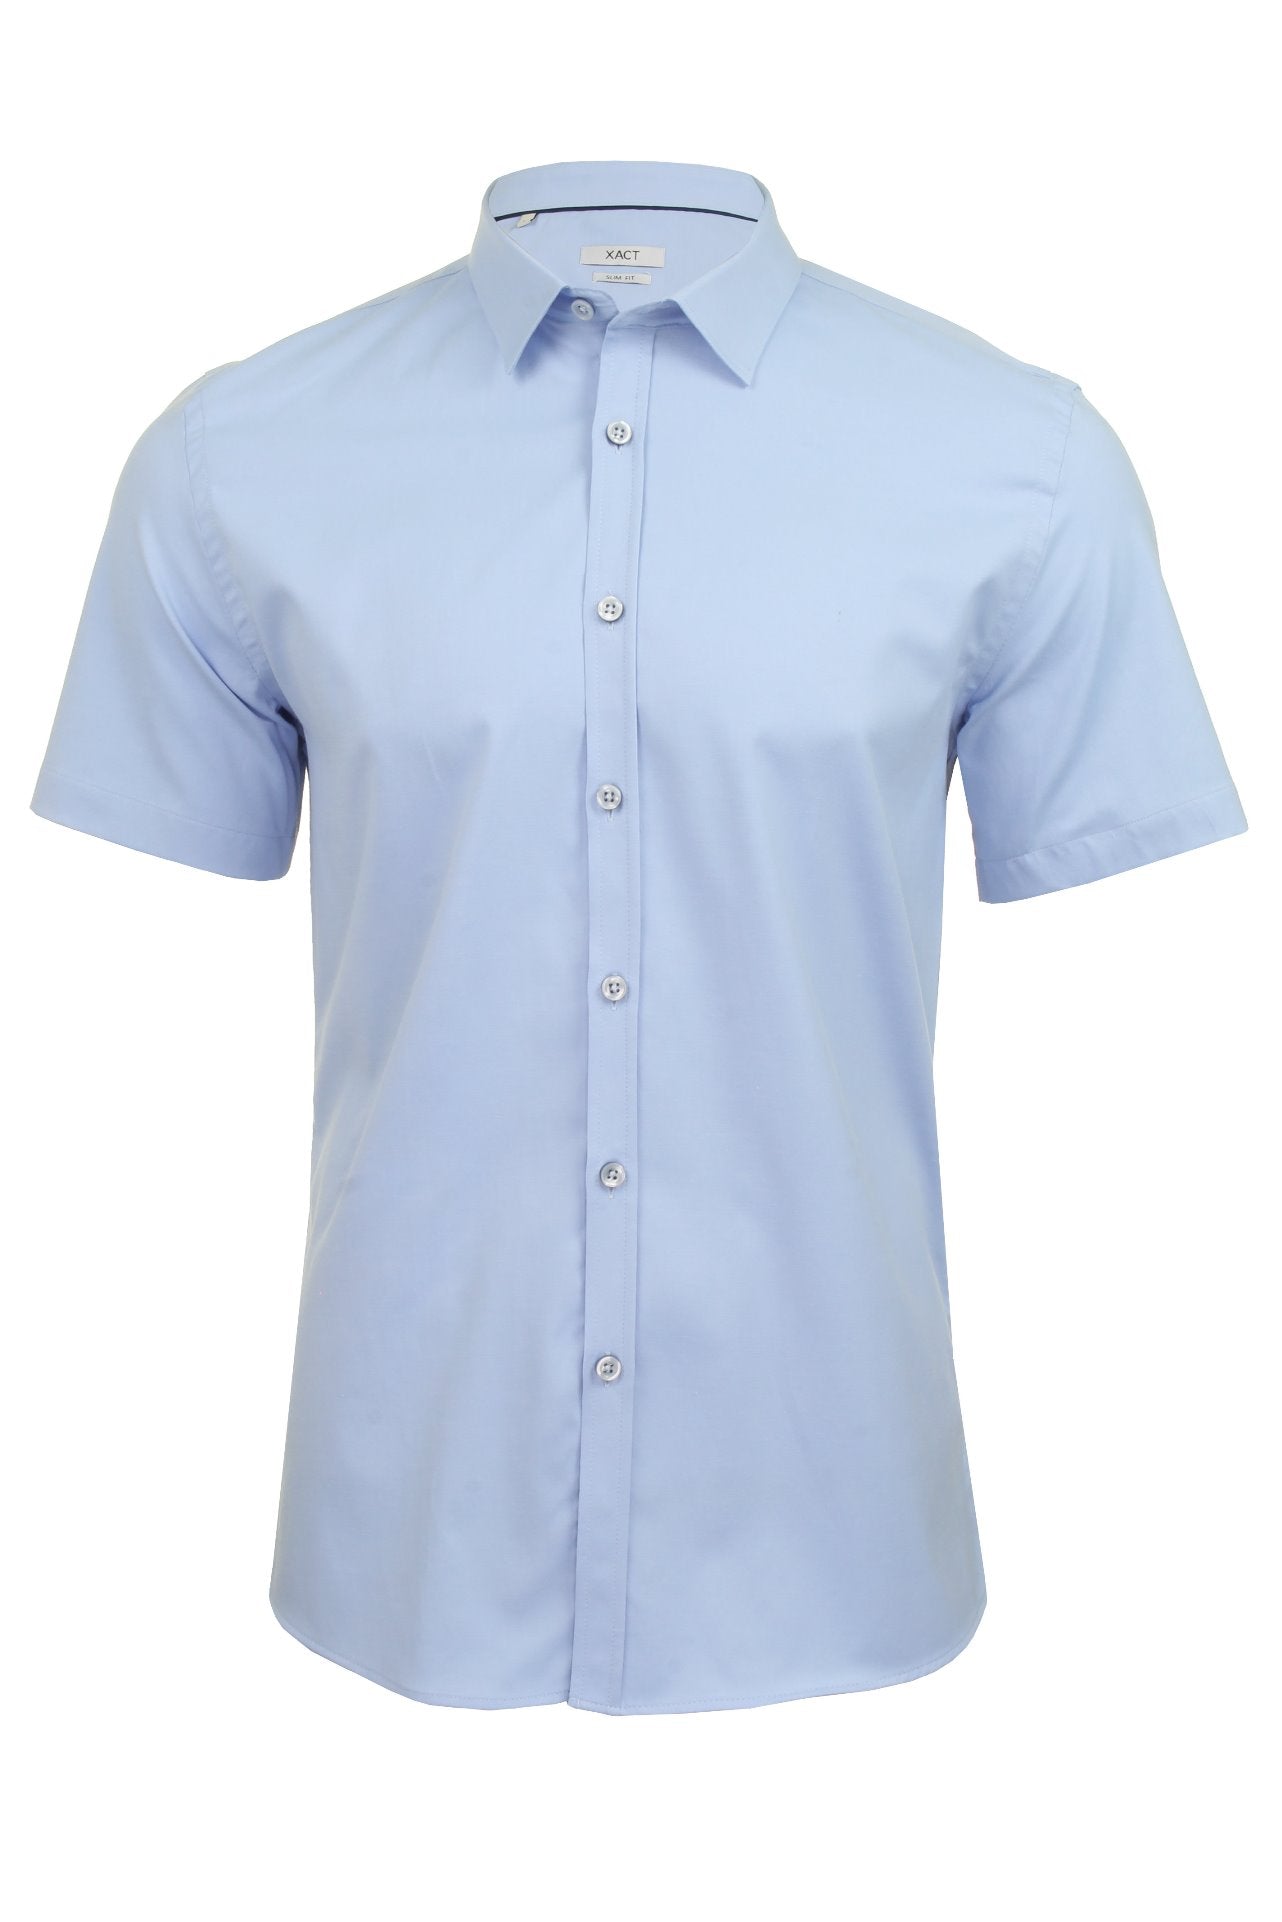 Xact Mens Short Sleeved Poplin Stretch Shirt - Slim Fit-Main Image